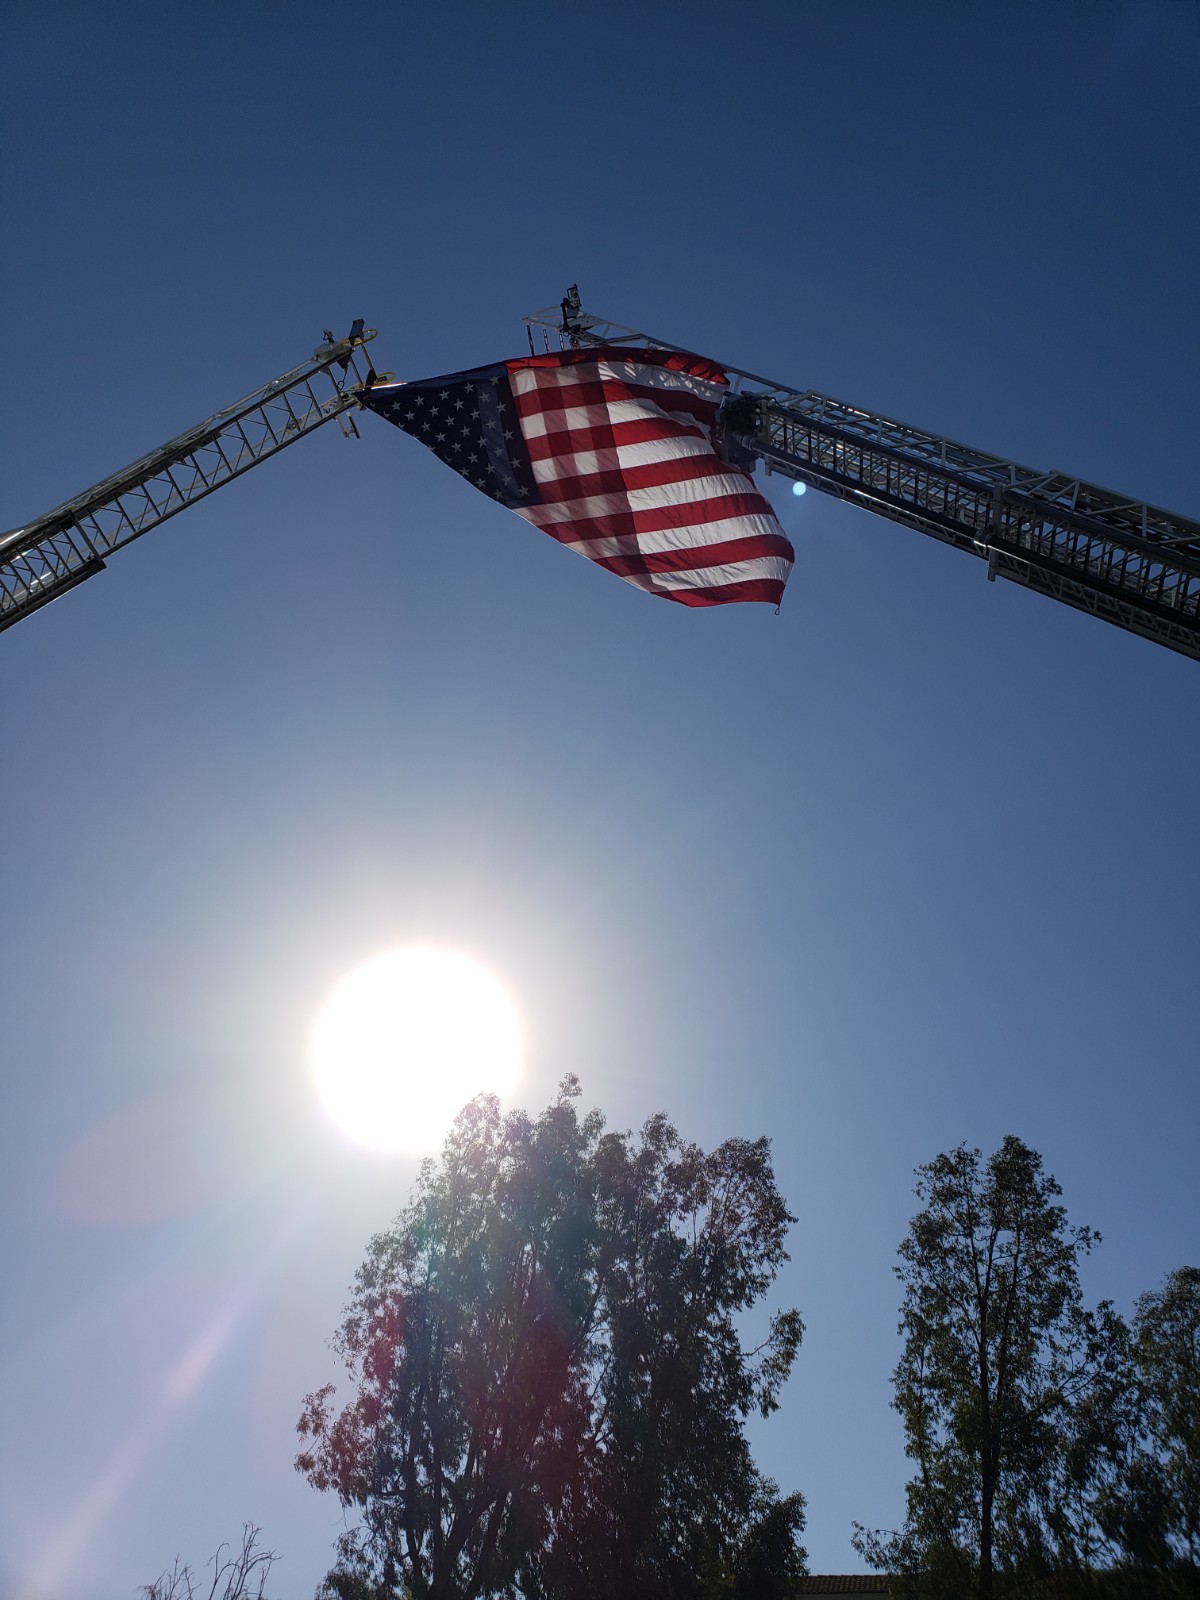 An American flag raised between two firetruck ladders